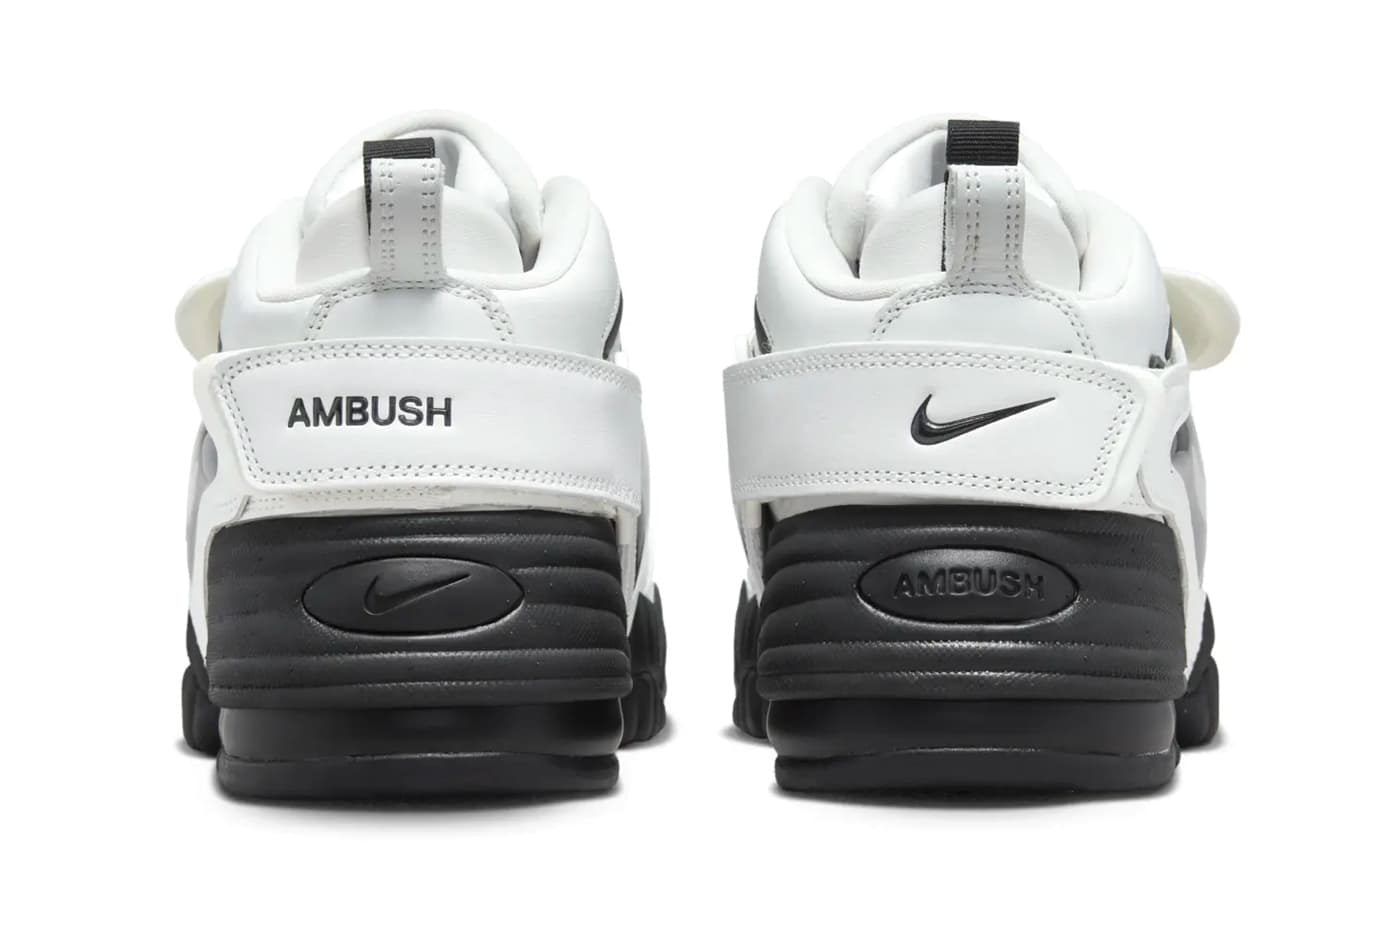 AMBUSH x Nike Air Adjust Force “White”